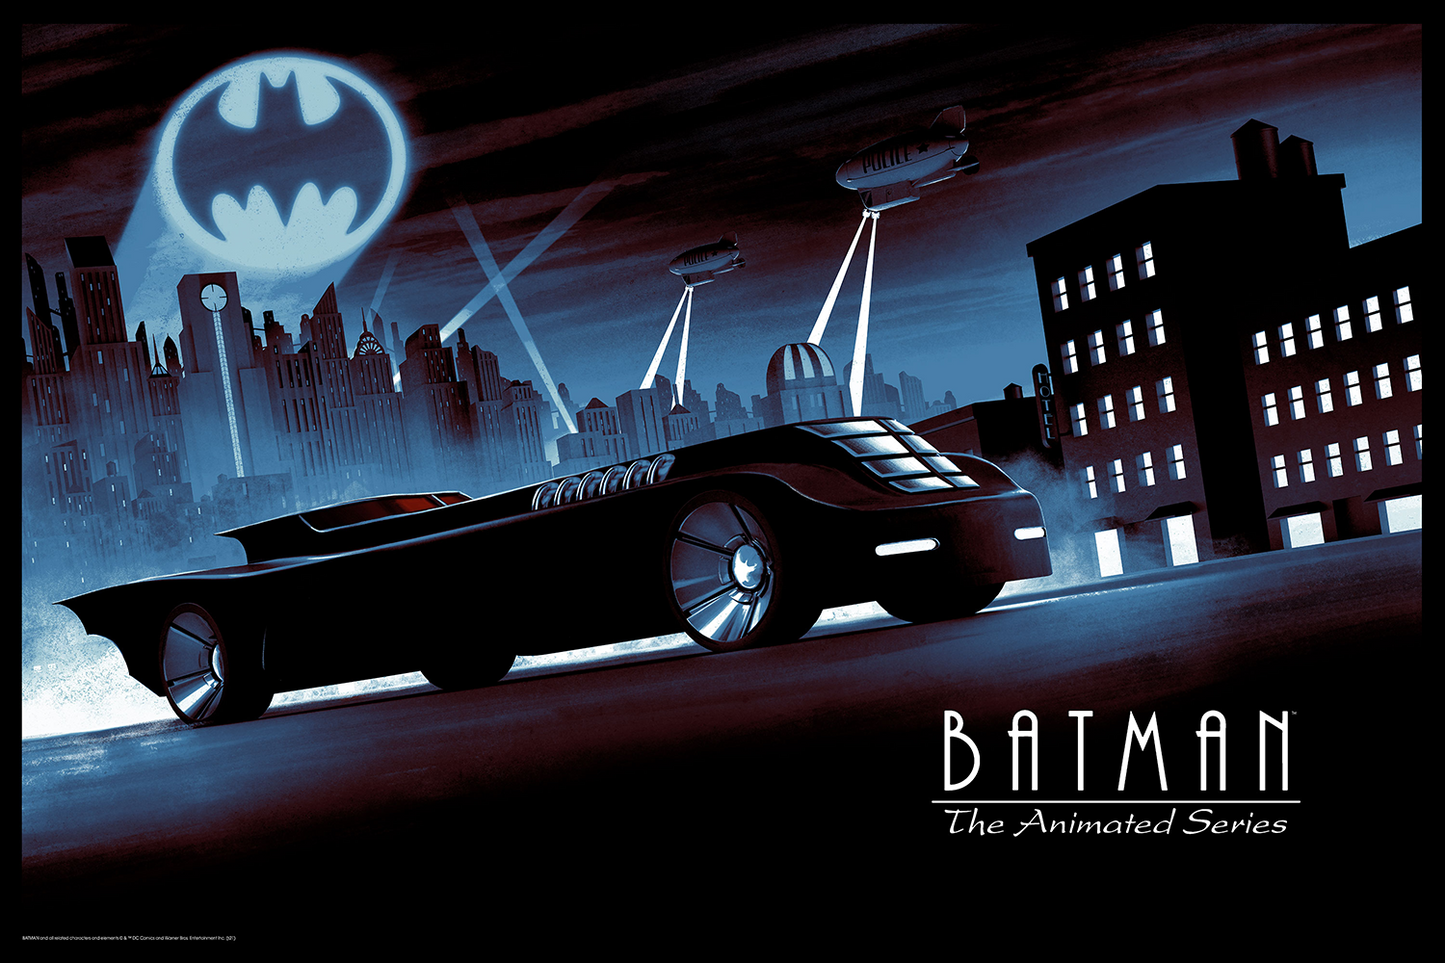 Matt Ferguson "Batman: The Animated Series" Variant